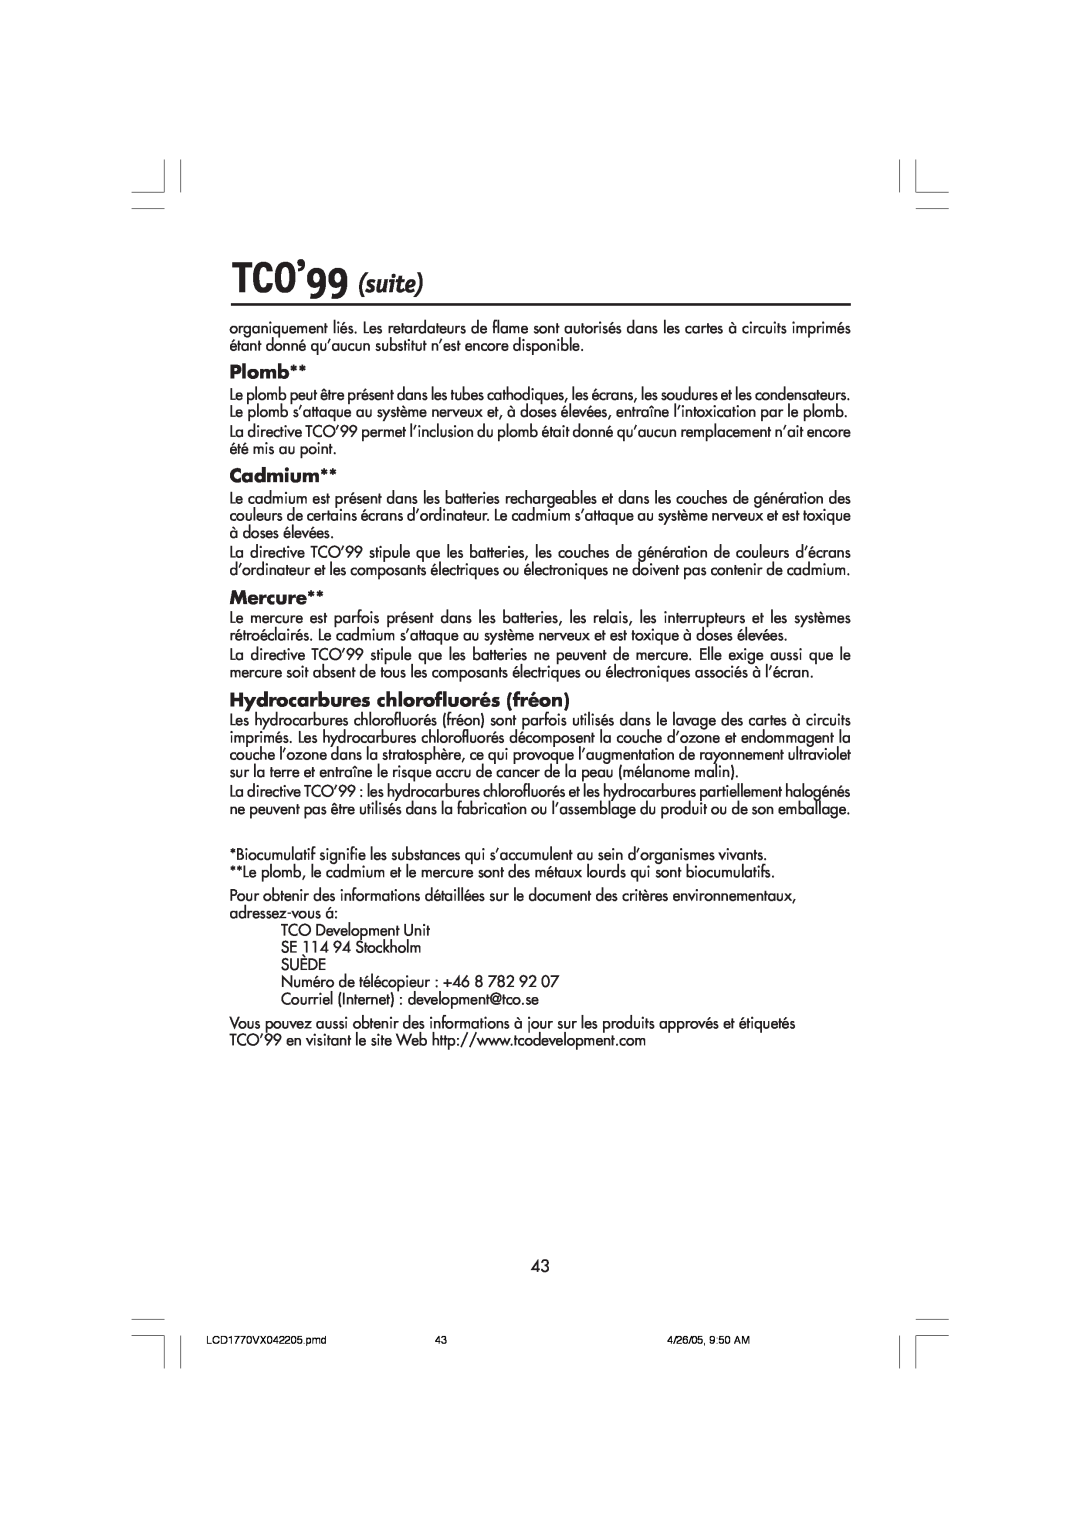 NEC LCD1770VX user manual TCO’99 suite, Plomb, Cadmium, Mercure, Hydrocarbures chlorofluorés fréon 